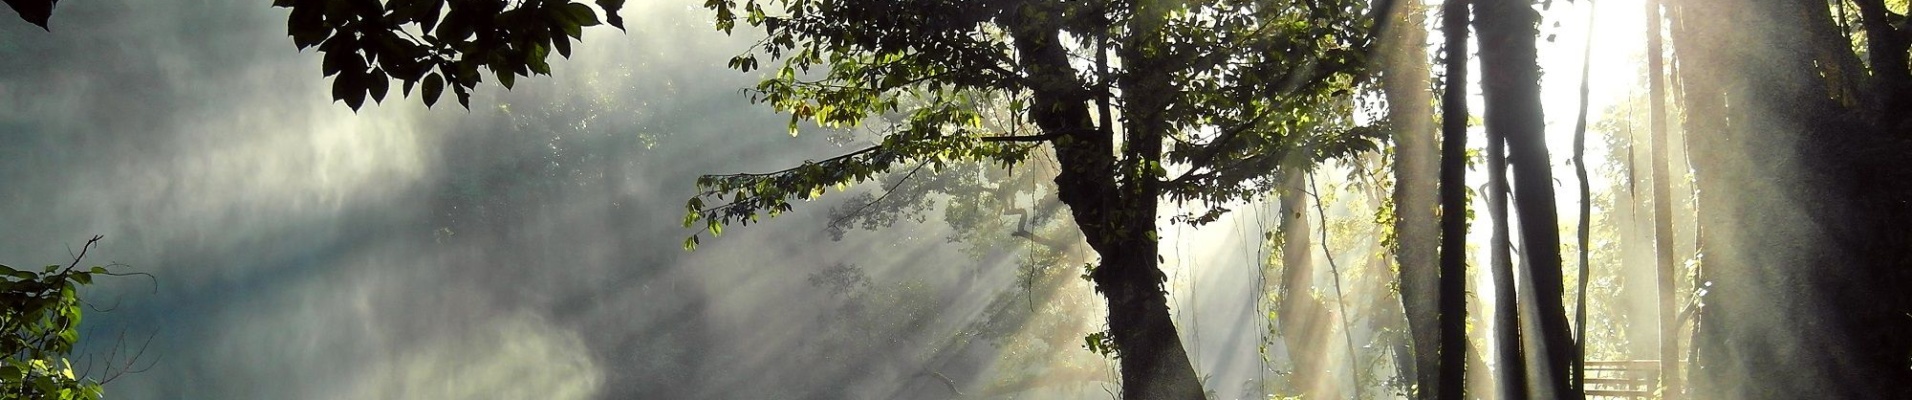 Cascade Misol Ha, Chiapas, Mexique